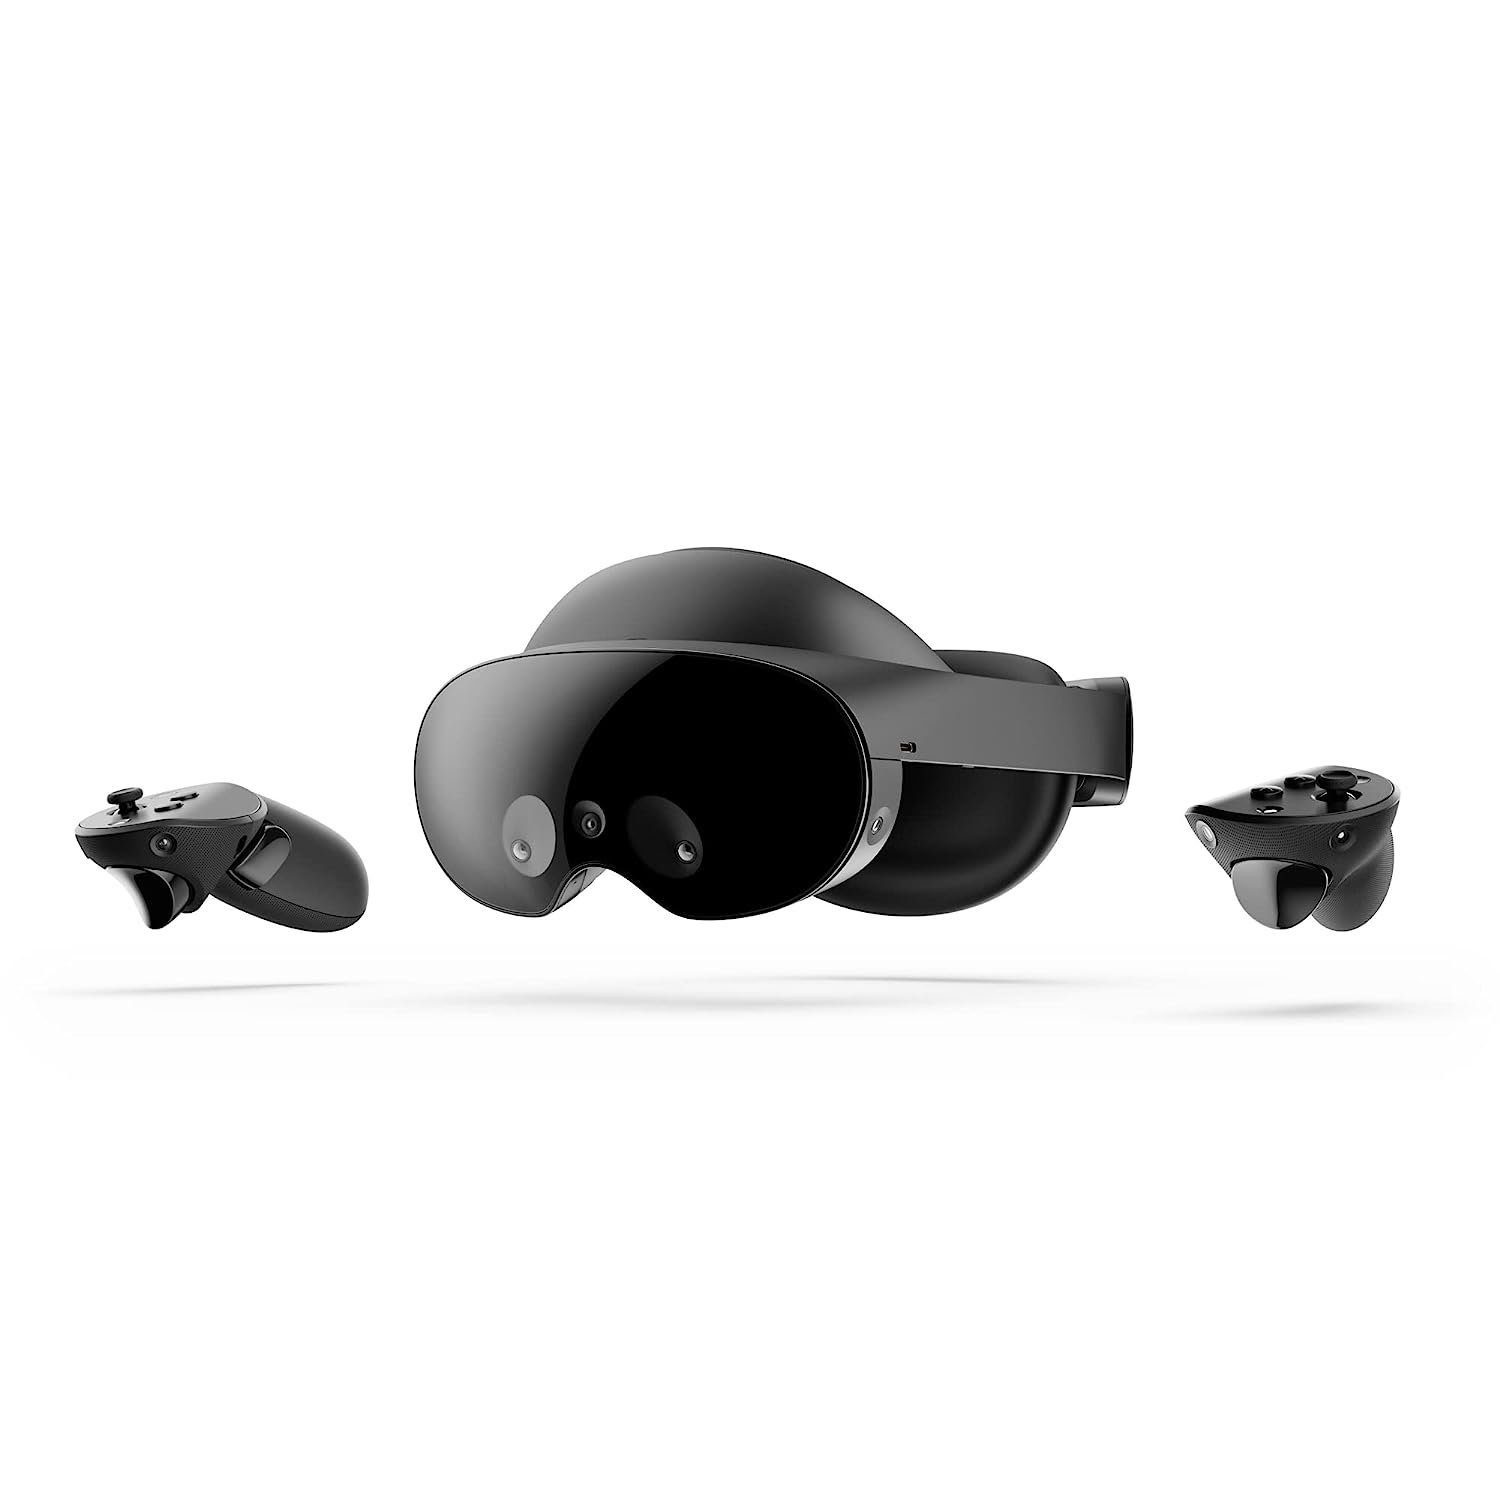 Meta Meta Quest Pro 256Gb bahnbrechend Mixed Reality leistungsstark Technik Virtual-Reality-Brille (2064 x 2208 px, Virtual Reality Brille, Camera, VR Brille)